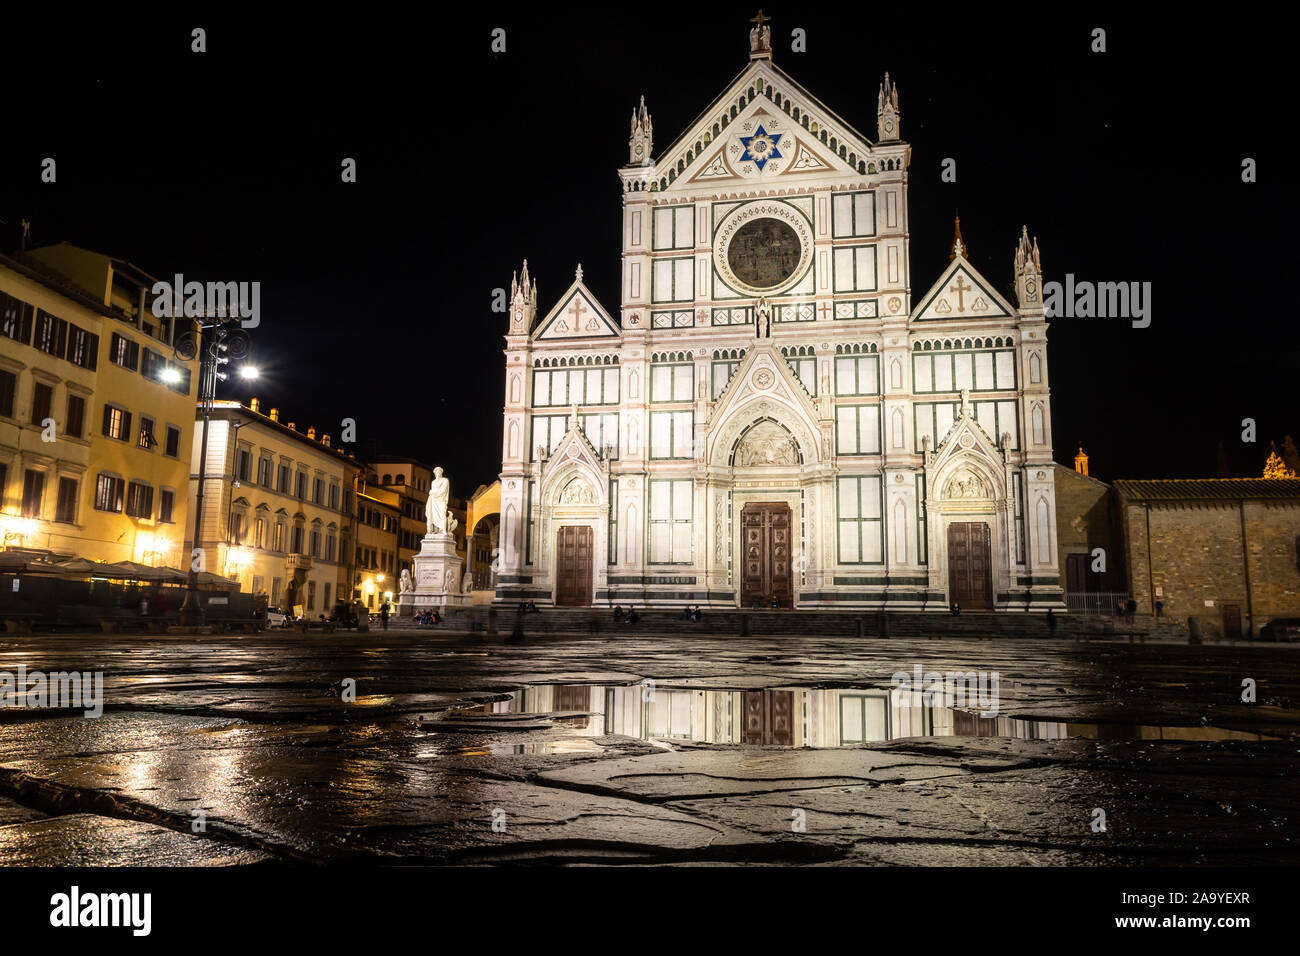 Basilica di Santa Croce at night in Florence, Italy Stock Photo